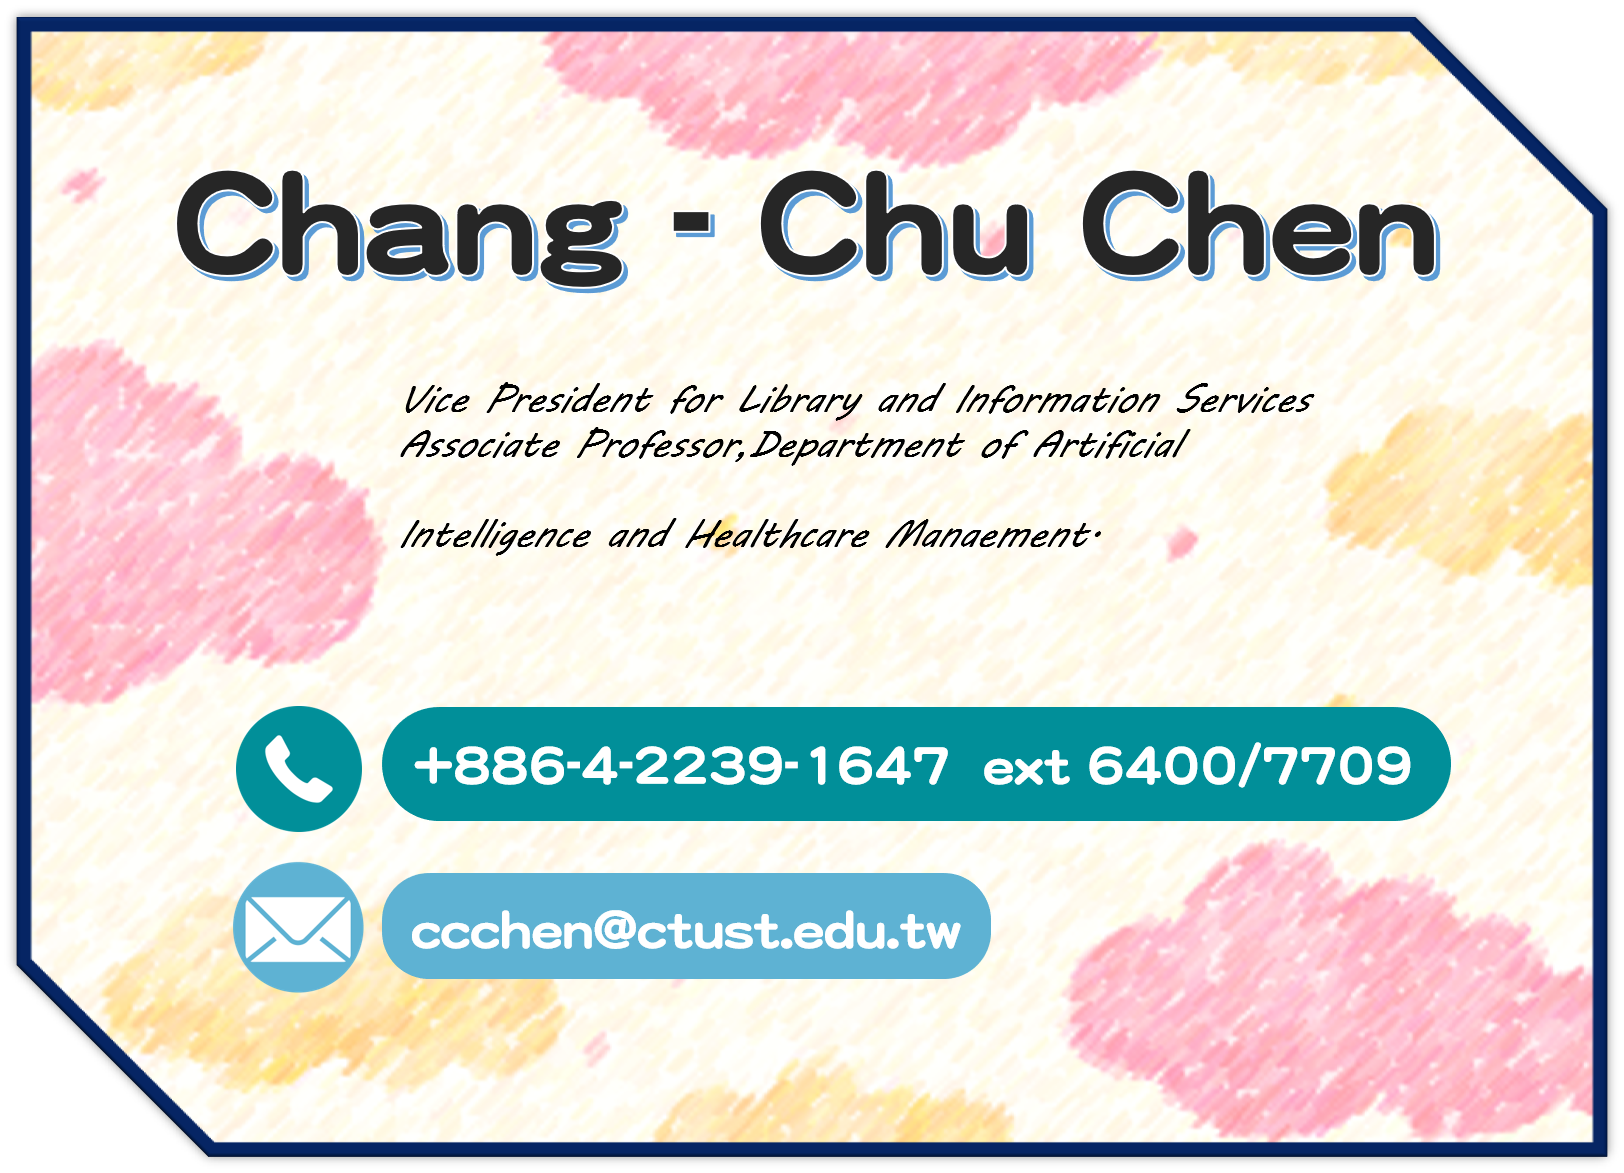 Chang - Chu Chen